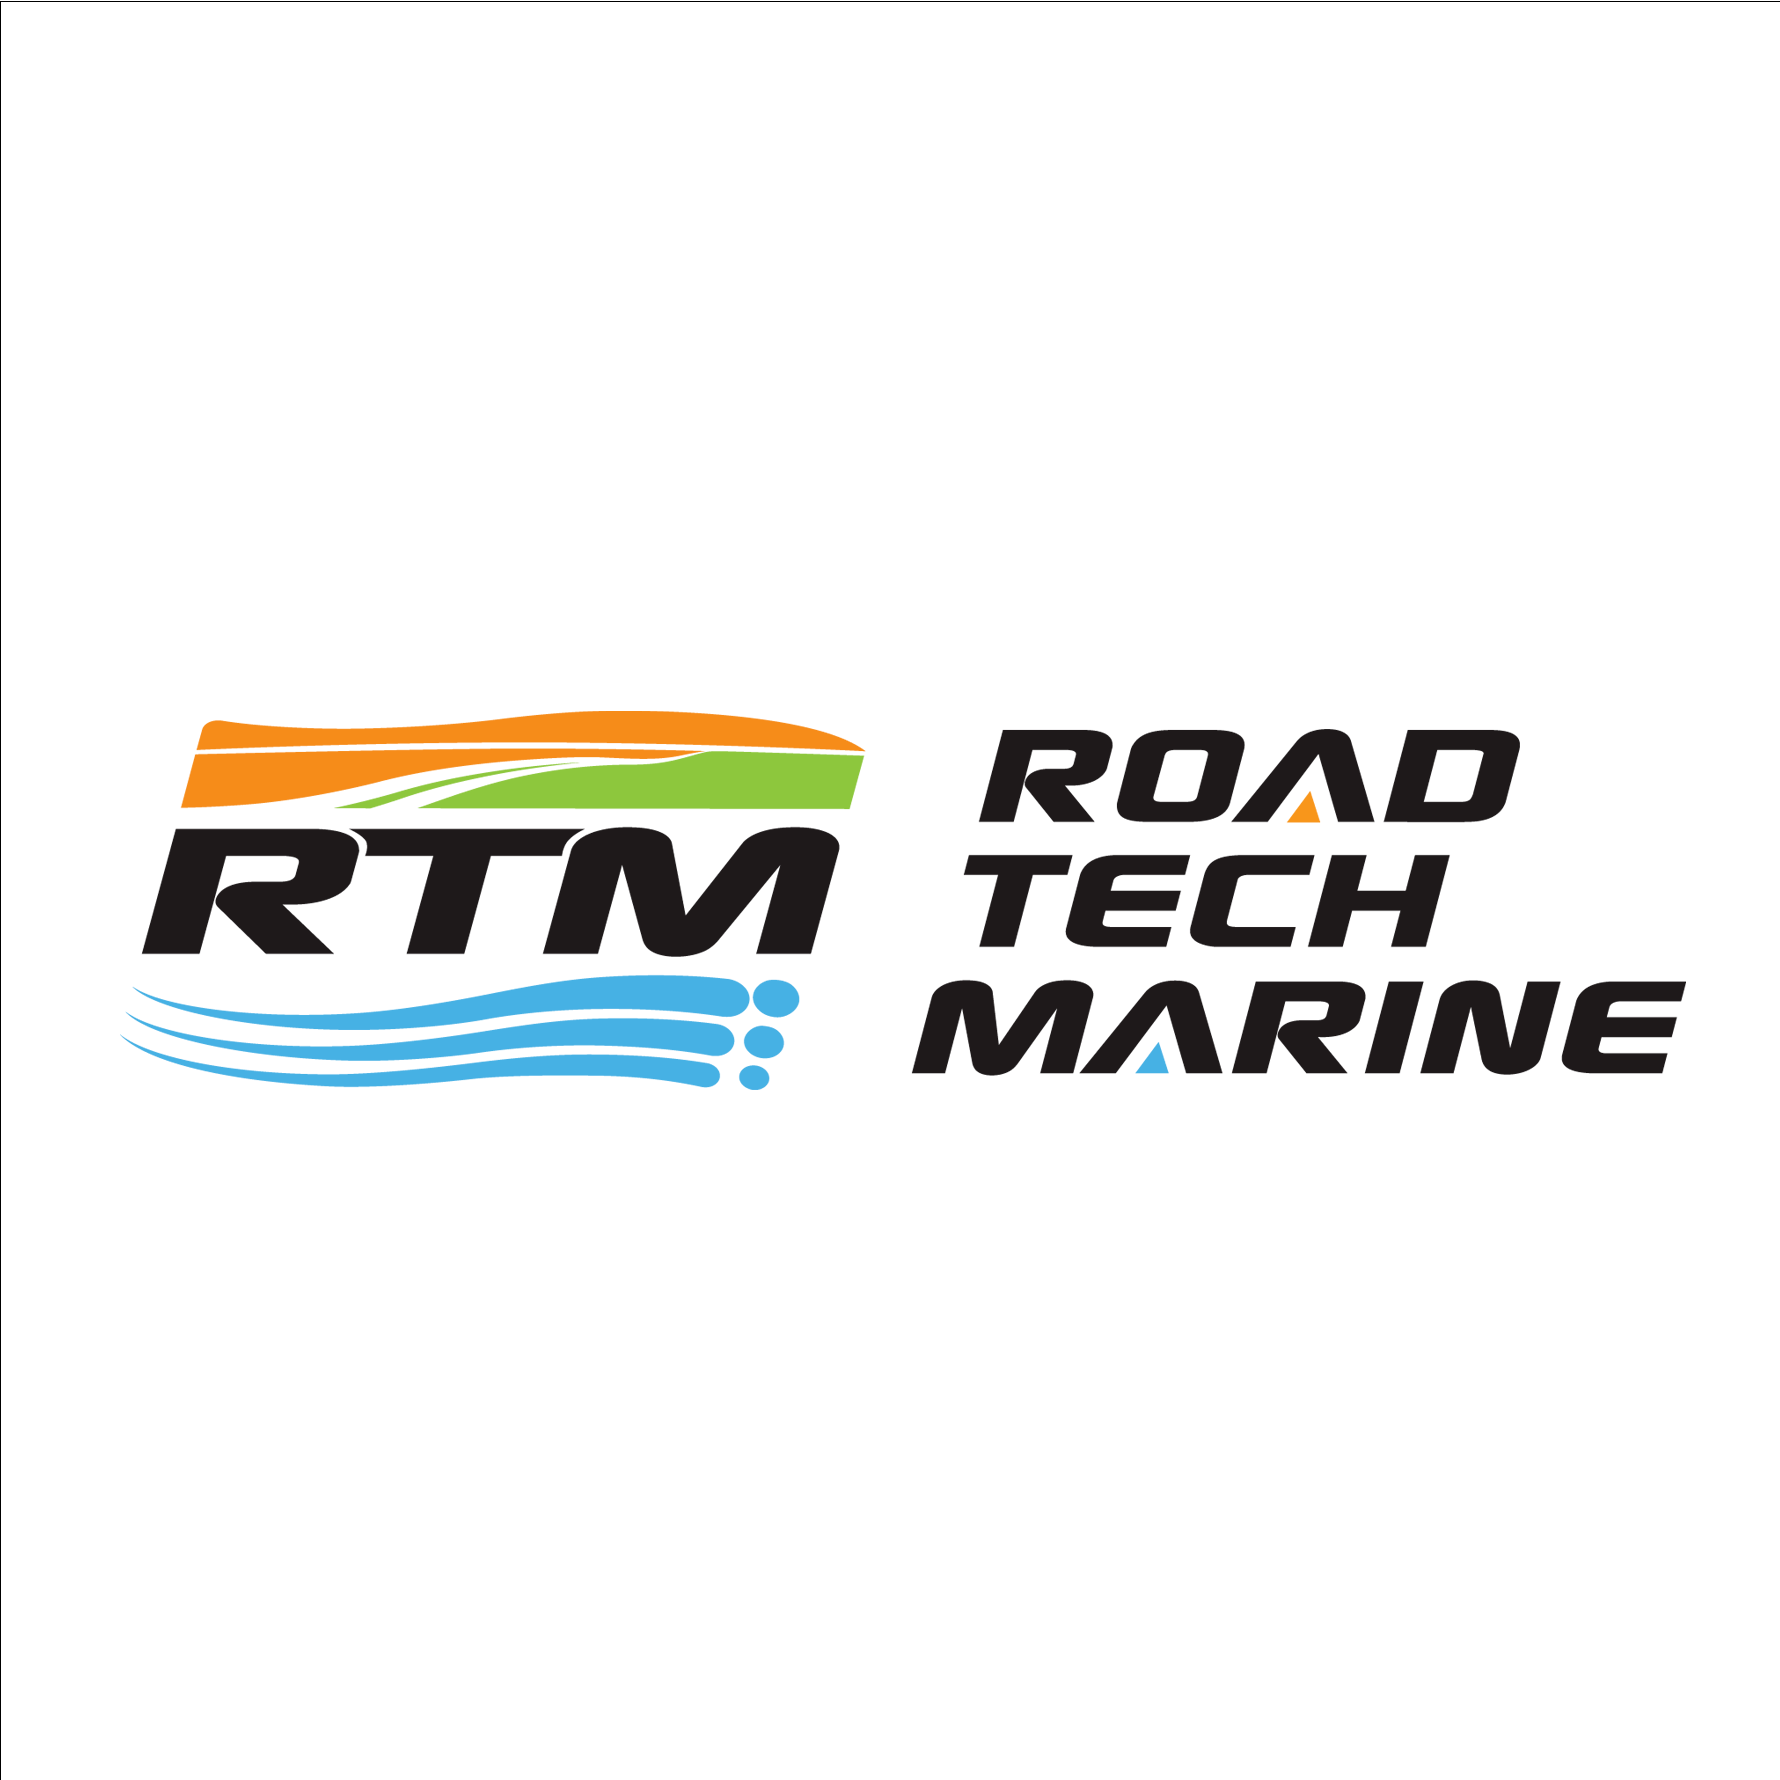 RTM - Road Tech Marine Penrith - Jamisontown, NSW 2750 - (02) 4722 4555 | ShowMeLocal.com